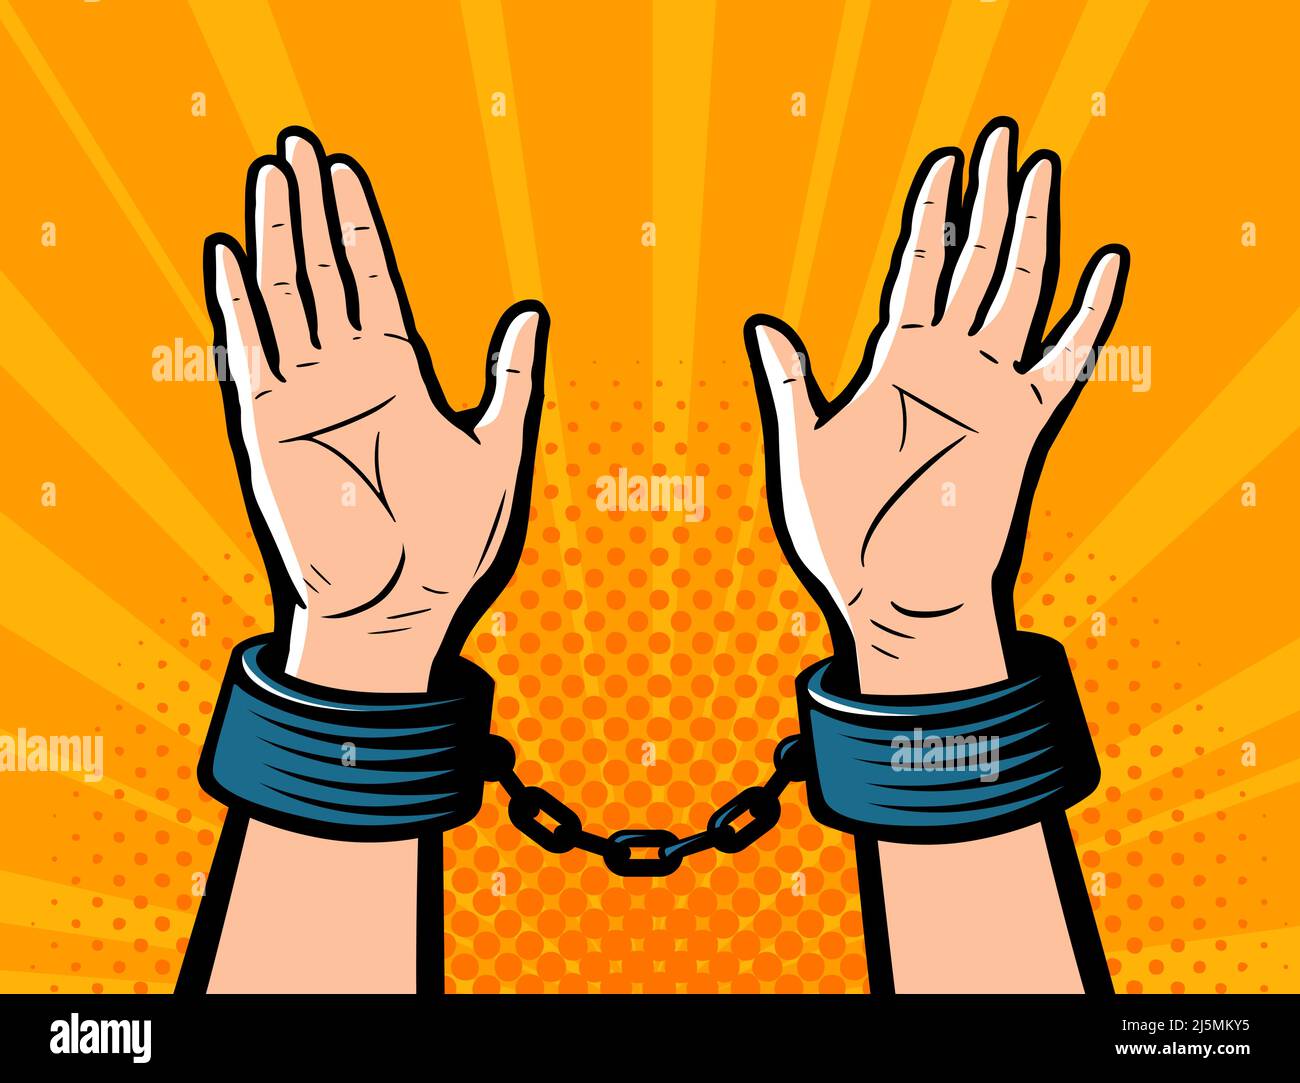 Hands in handcuffs. Handcuffed hands vector. Criminal in shackles in retro pop art comic style Stock Vector